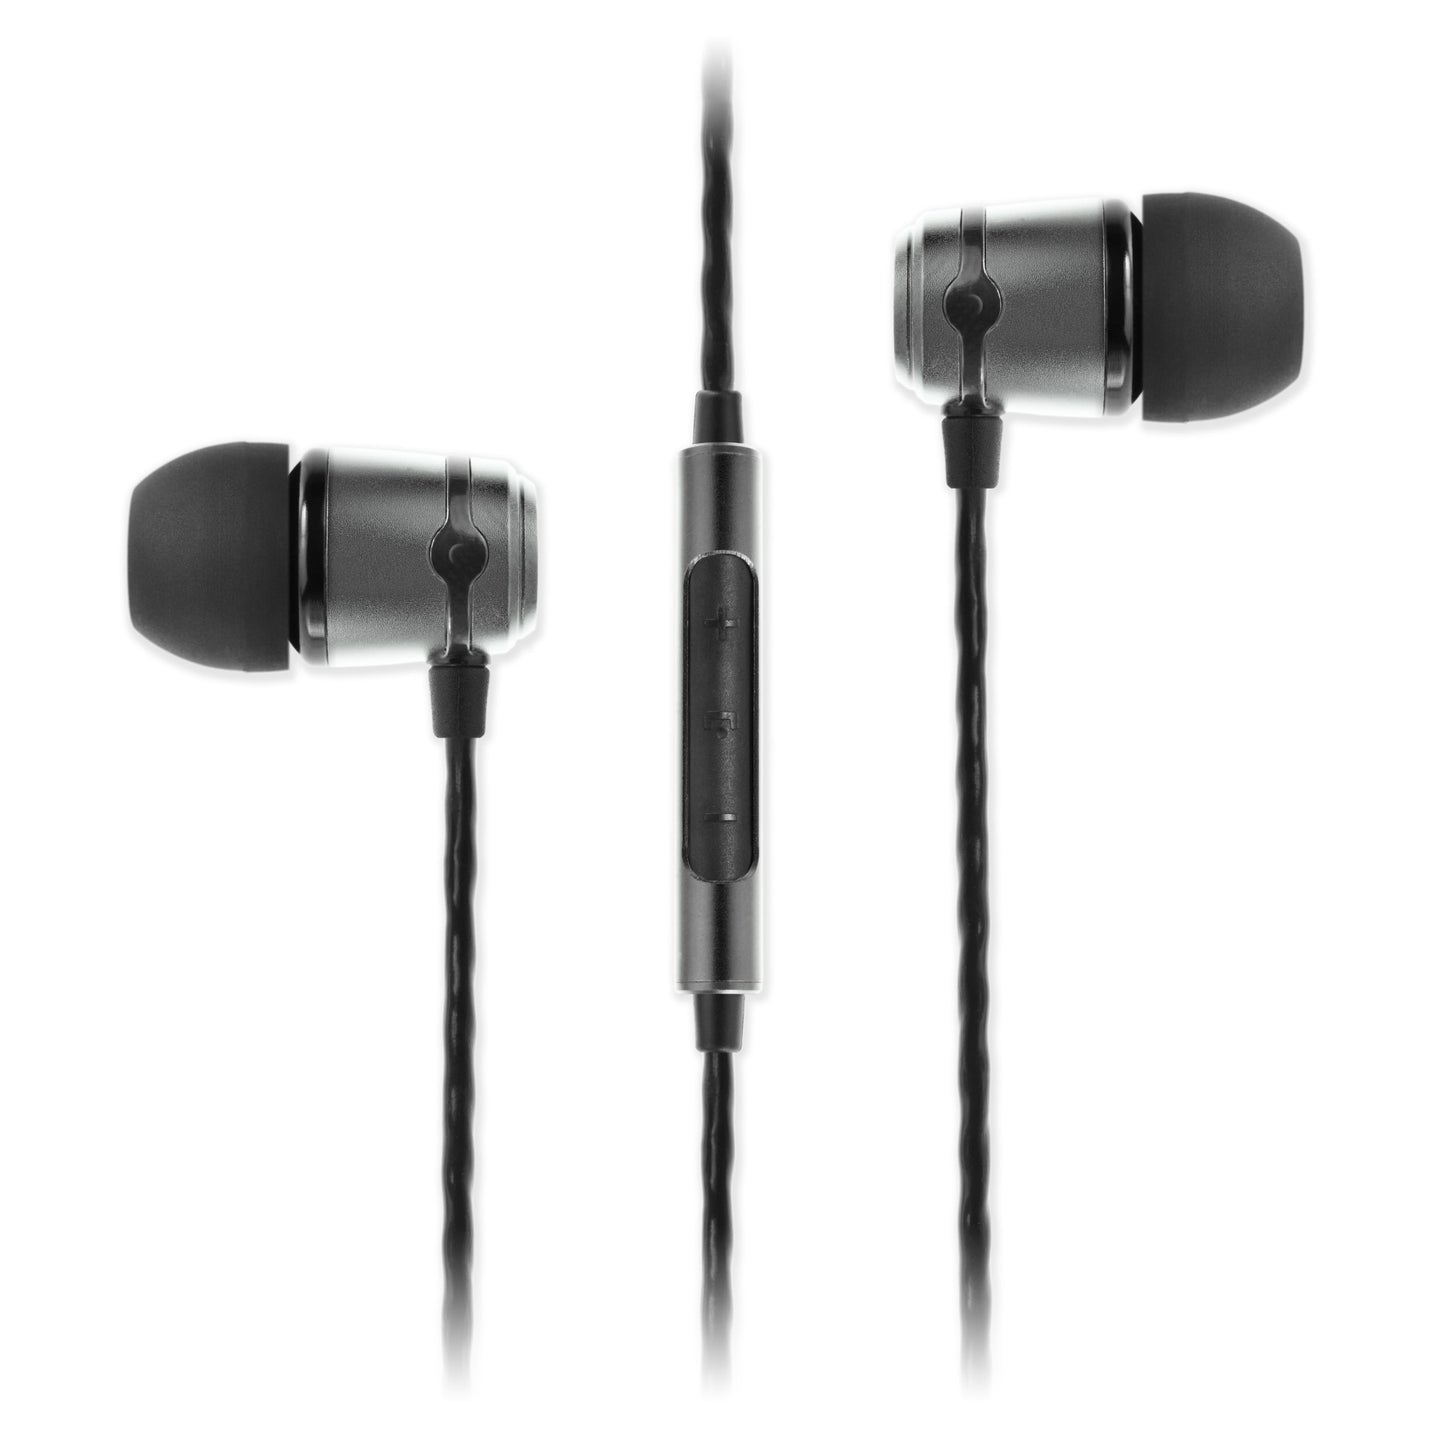 SoundMAGIC E50C In Ear Isolating Earphones with Mic - Refurbished